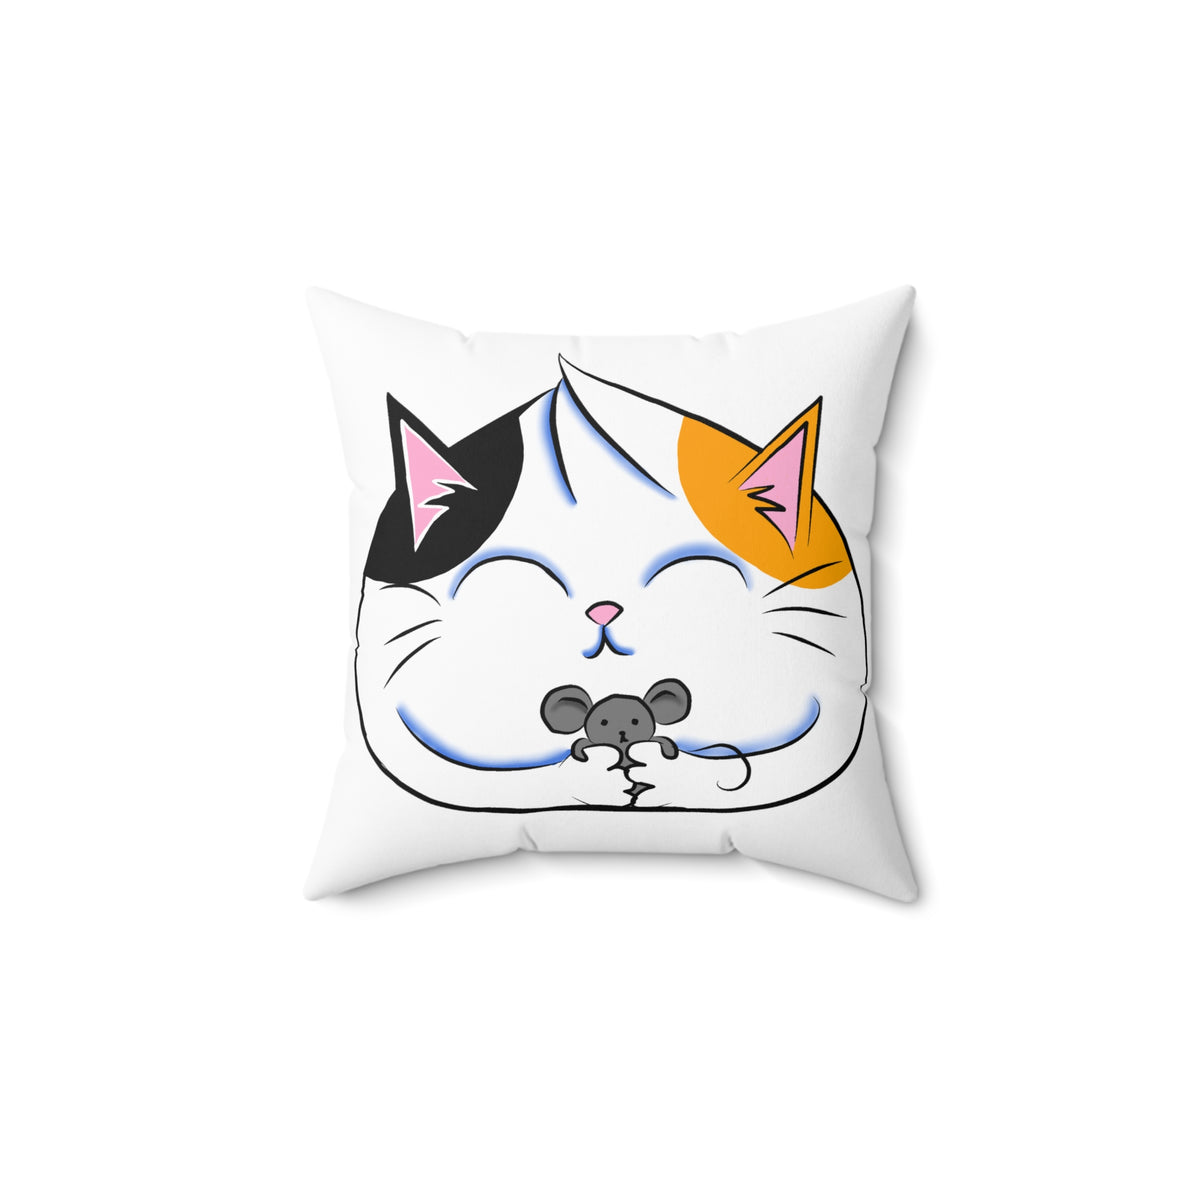 Adorable Calico Cat Dumpling Spun Polyester Pillow with Gray Mouse - Kawaii Esquire